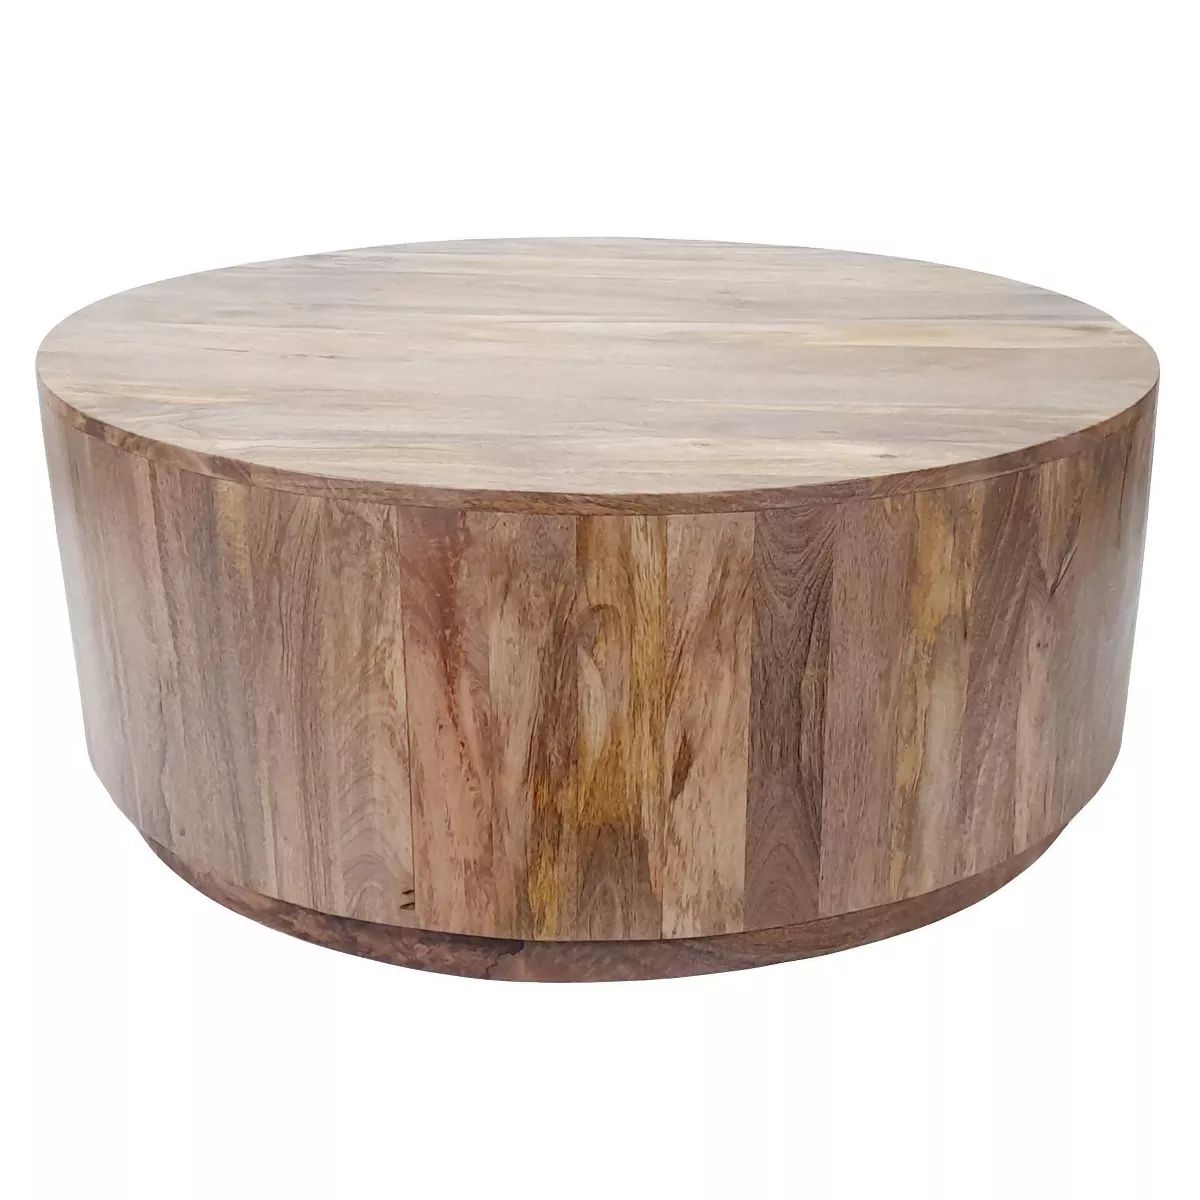 42" Barnett Round Coffee Table Natural - Carolina Chair & Table | Target